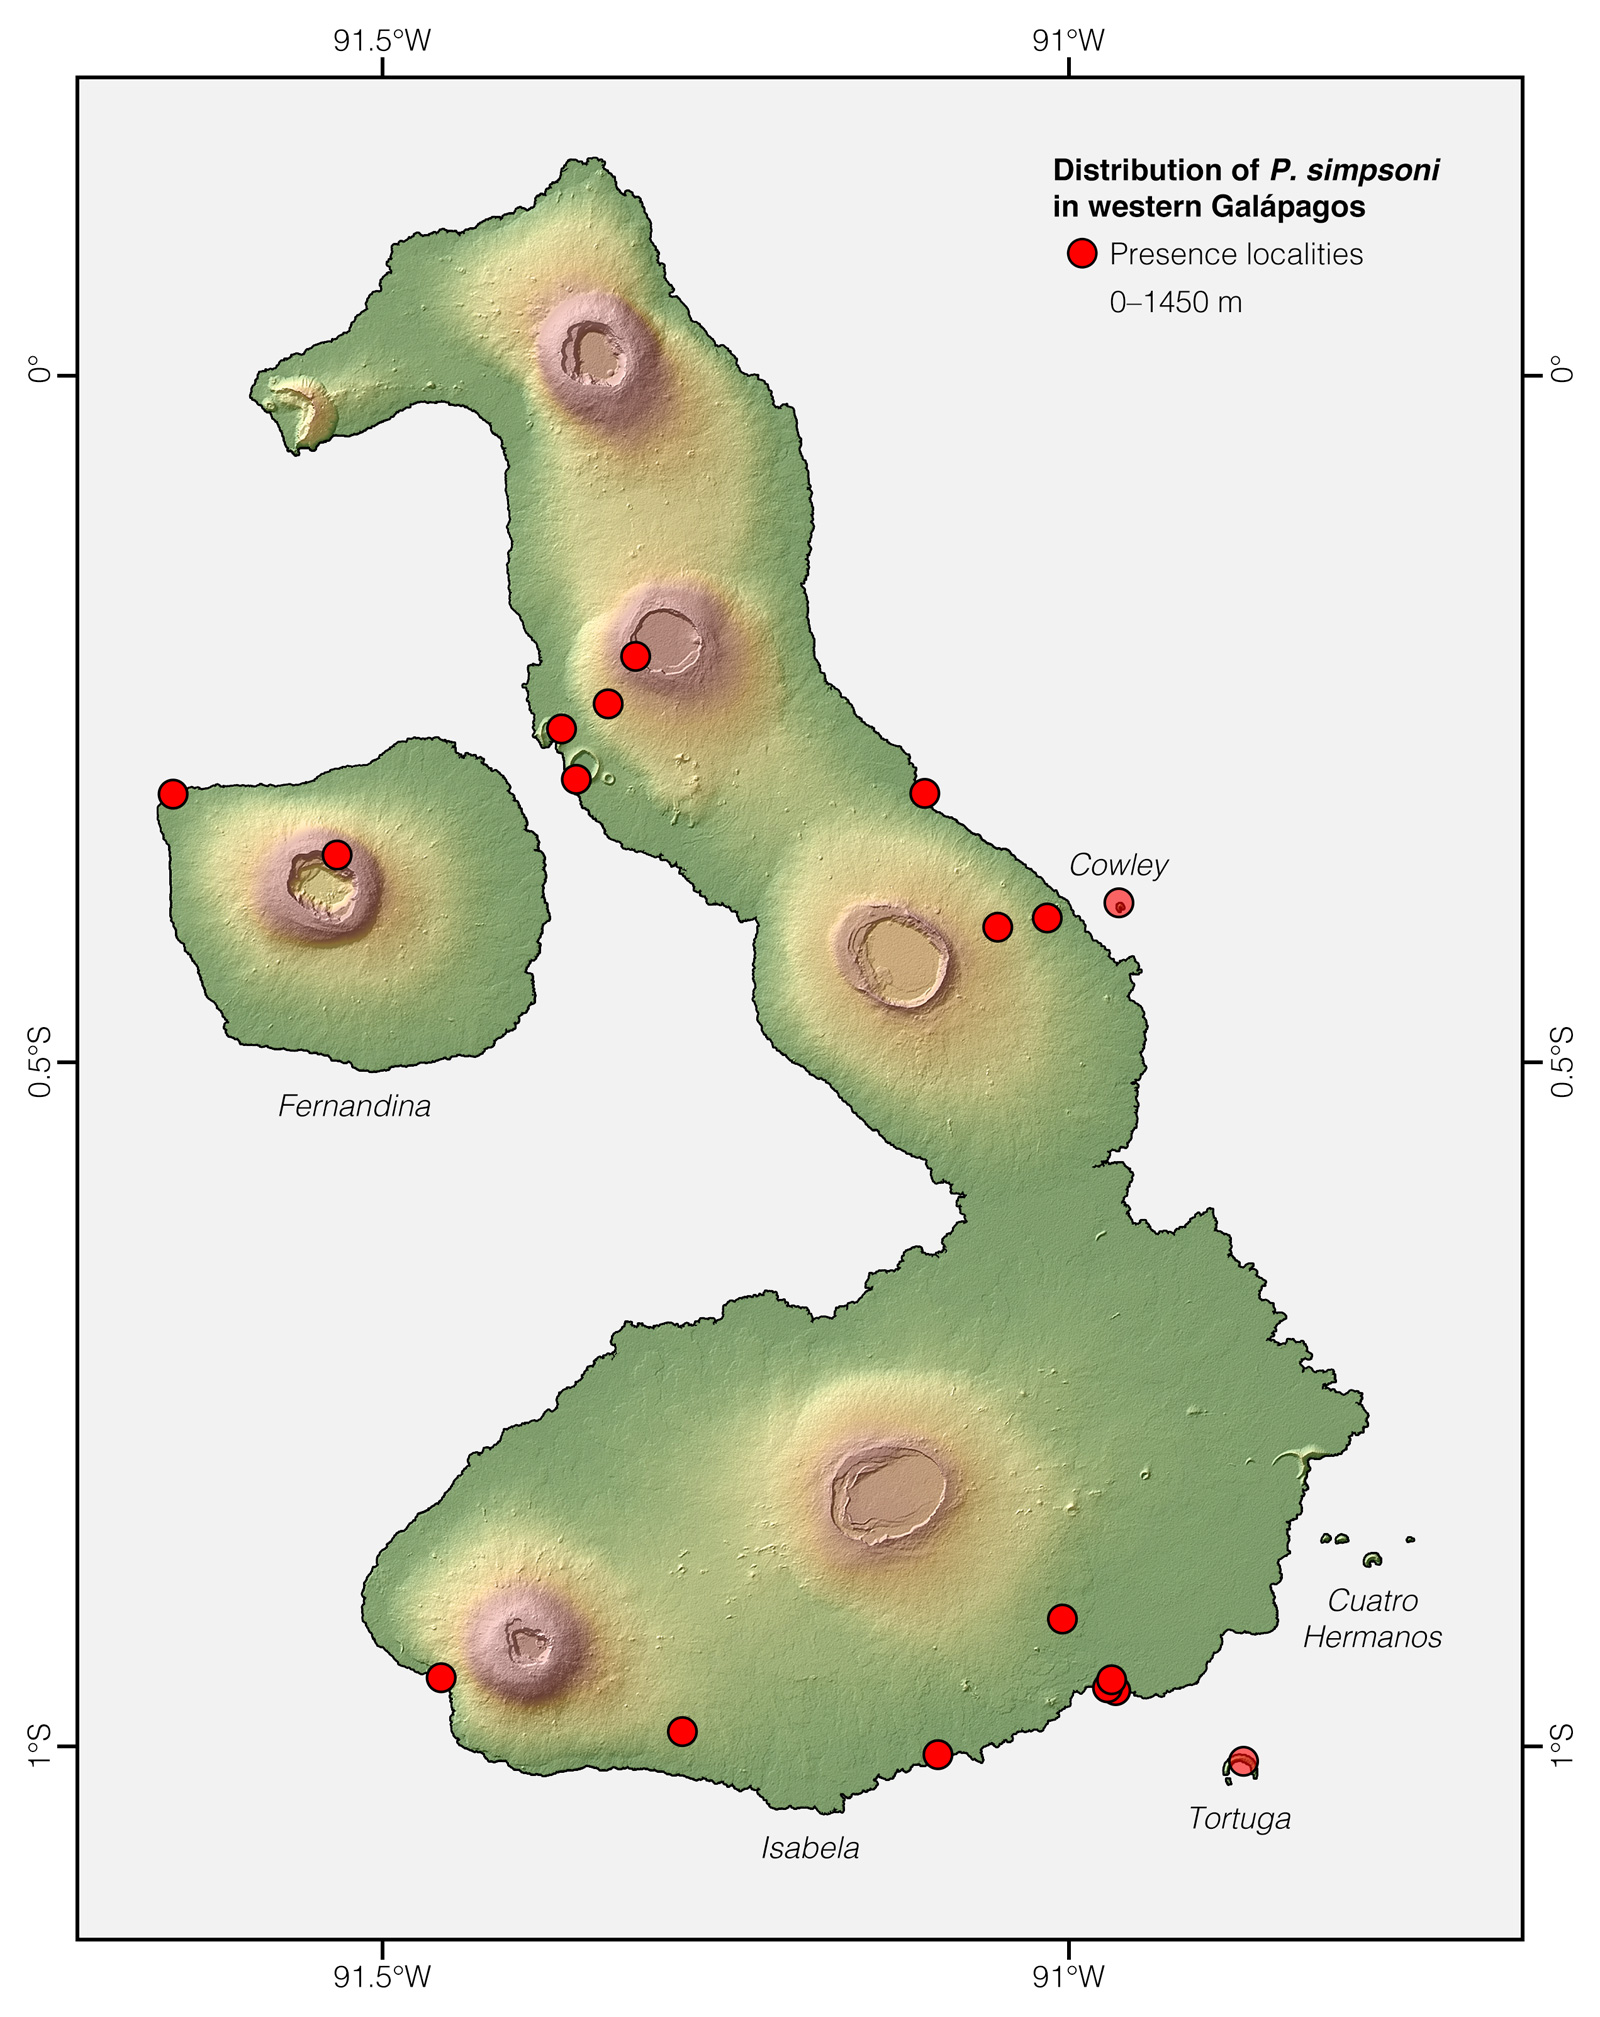 Distribution of Phyllodactylus simpsoni in western Galápagos